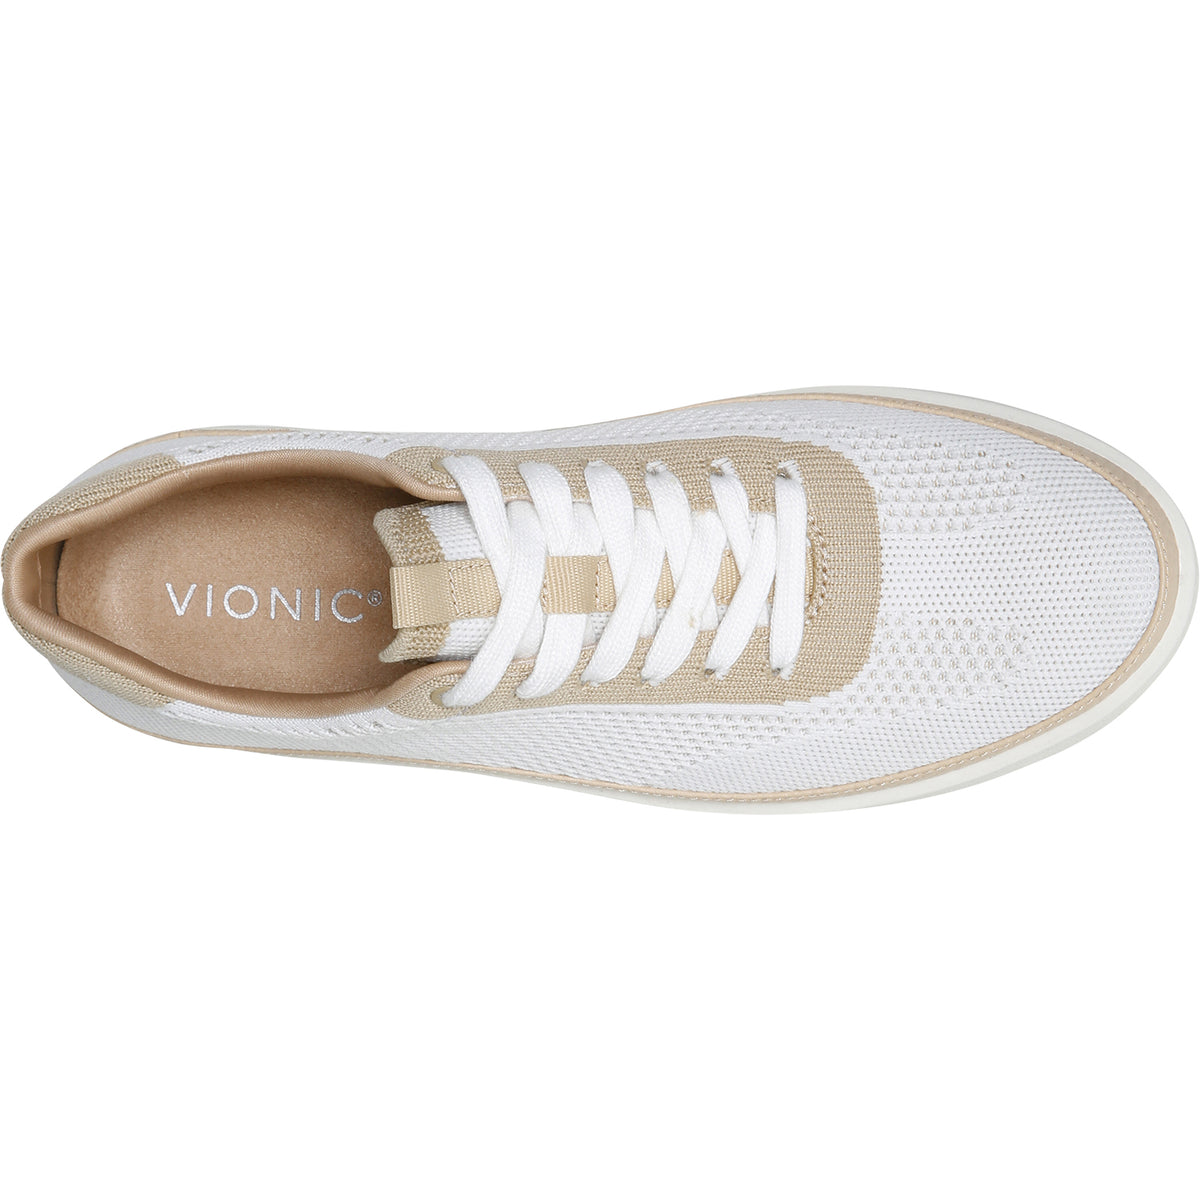 Vionic Galia | Women's Sneakers | Footwear etc.